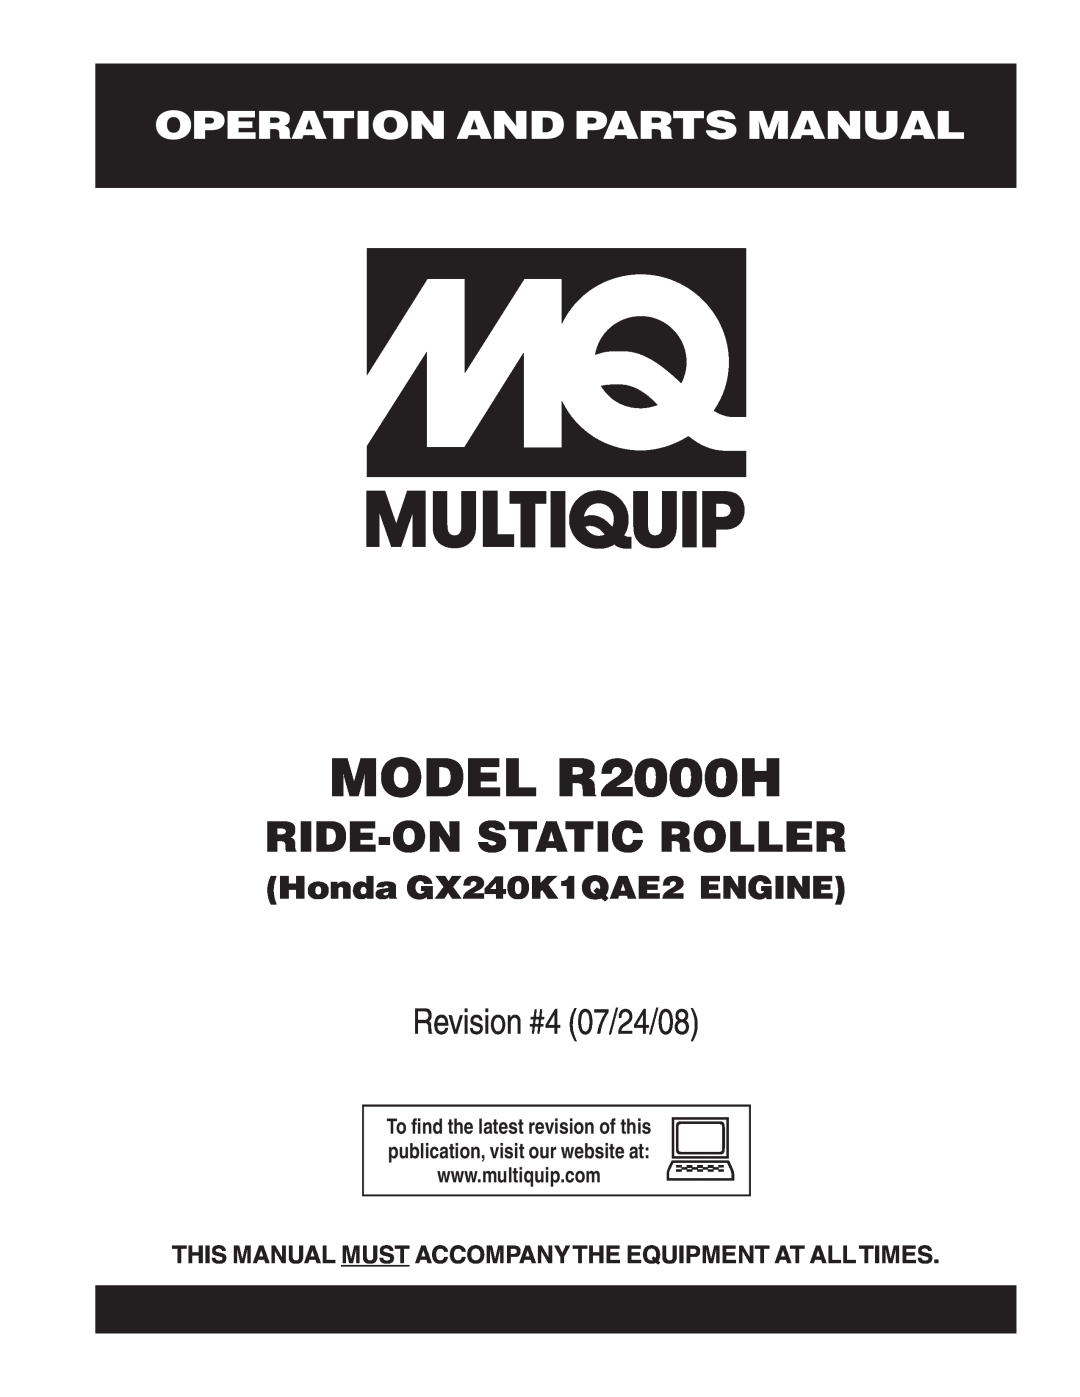 Multiquip manual Operation And Parts Manual, Honda GX240K1QAE2 ENGINE, MODEL R2000H, Ride-Onstatic Roller 